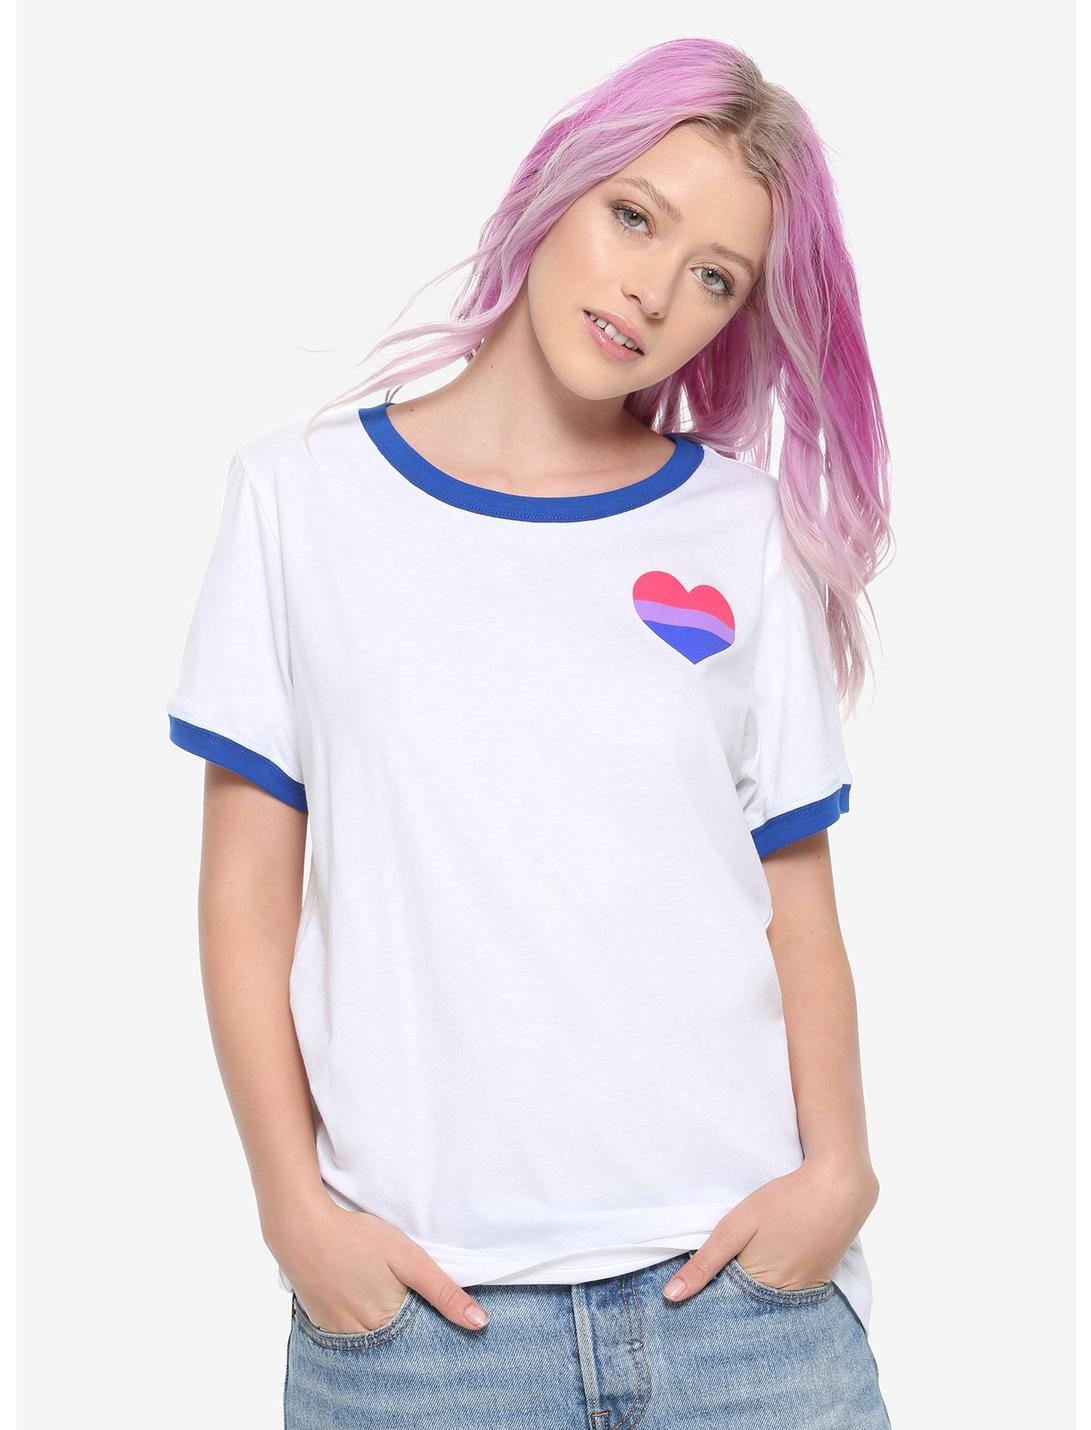 Subtle Bi Pride Shirt Bisexual Heart Shirt Bisexual Shirt Bisexual Flag T-Shirt Bisexual Pride Wear, Bi Flag Shirt Bi Pride Flag Shirt